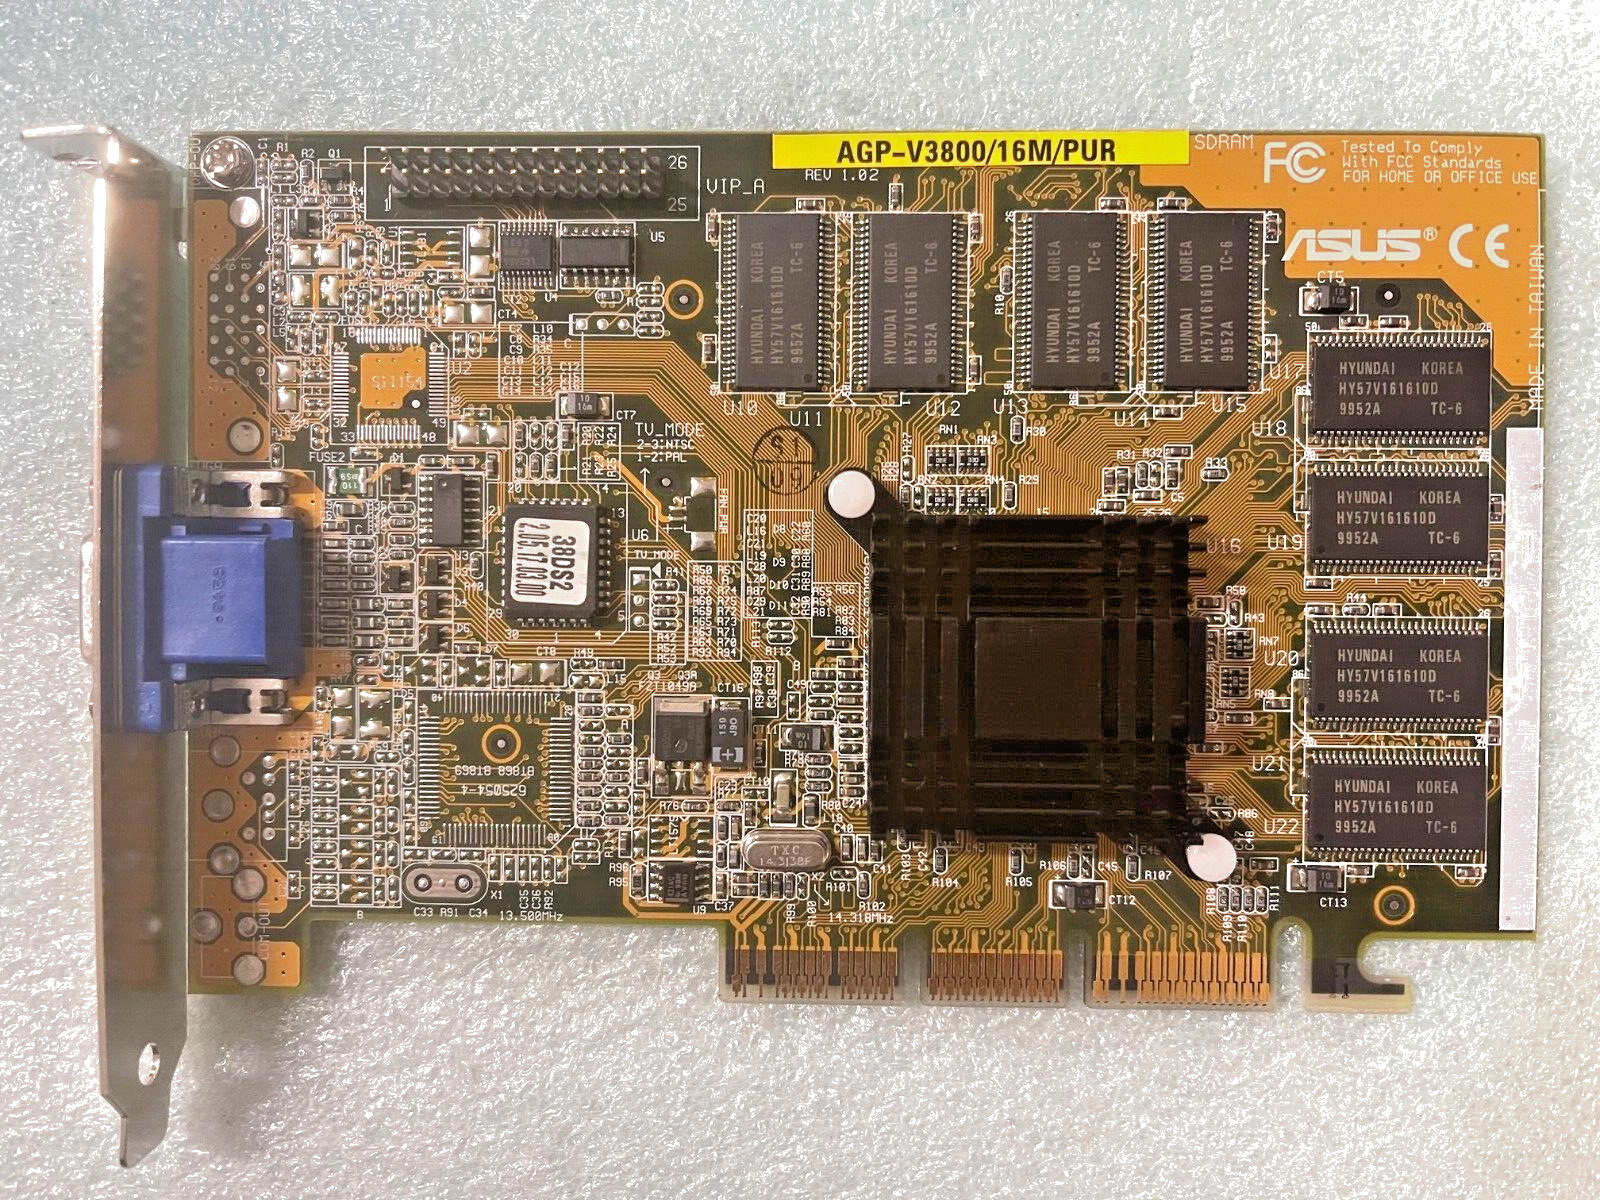 RARE ASUS AGP-V3800/16M PURE NVIDIA RIVA TNT2 AGP VGA CARD VGA ONLY MXB45